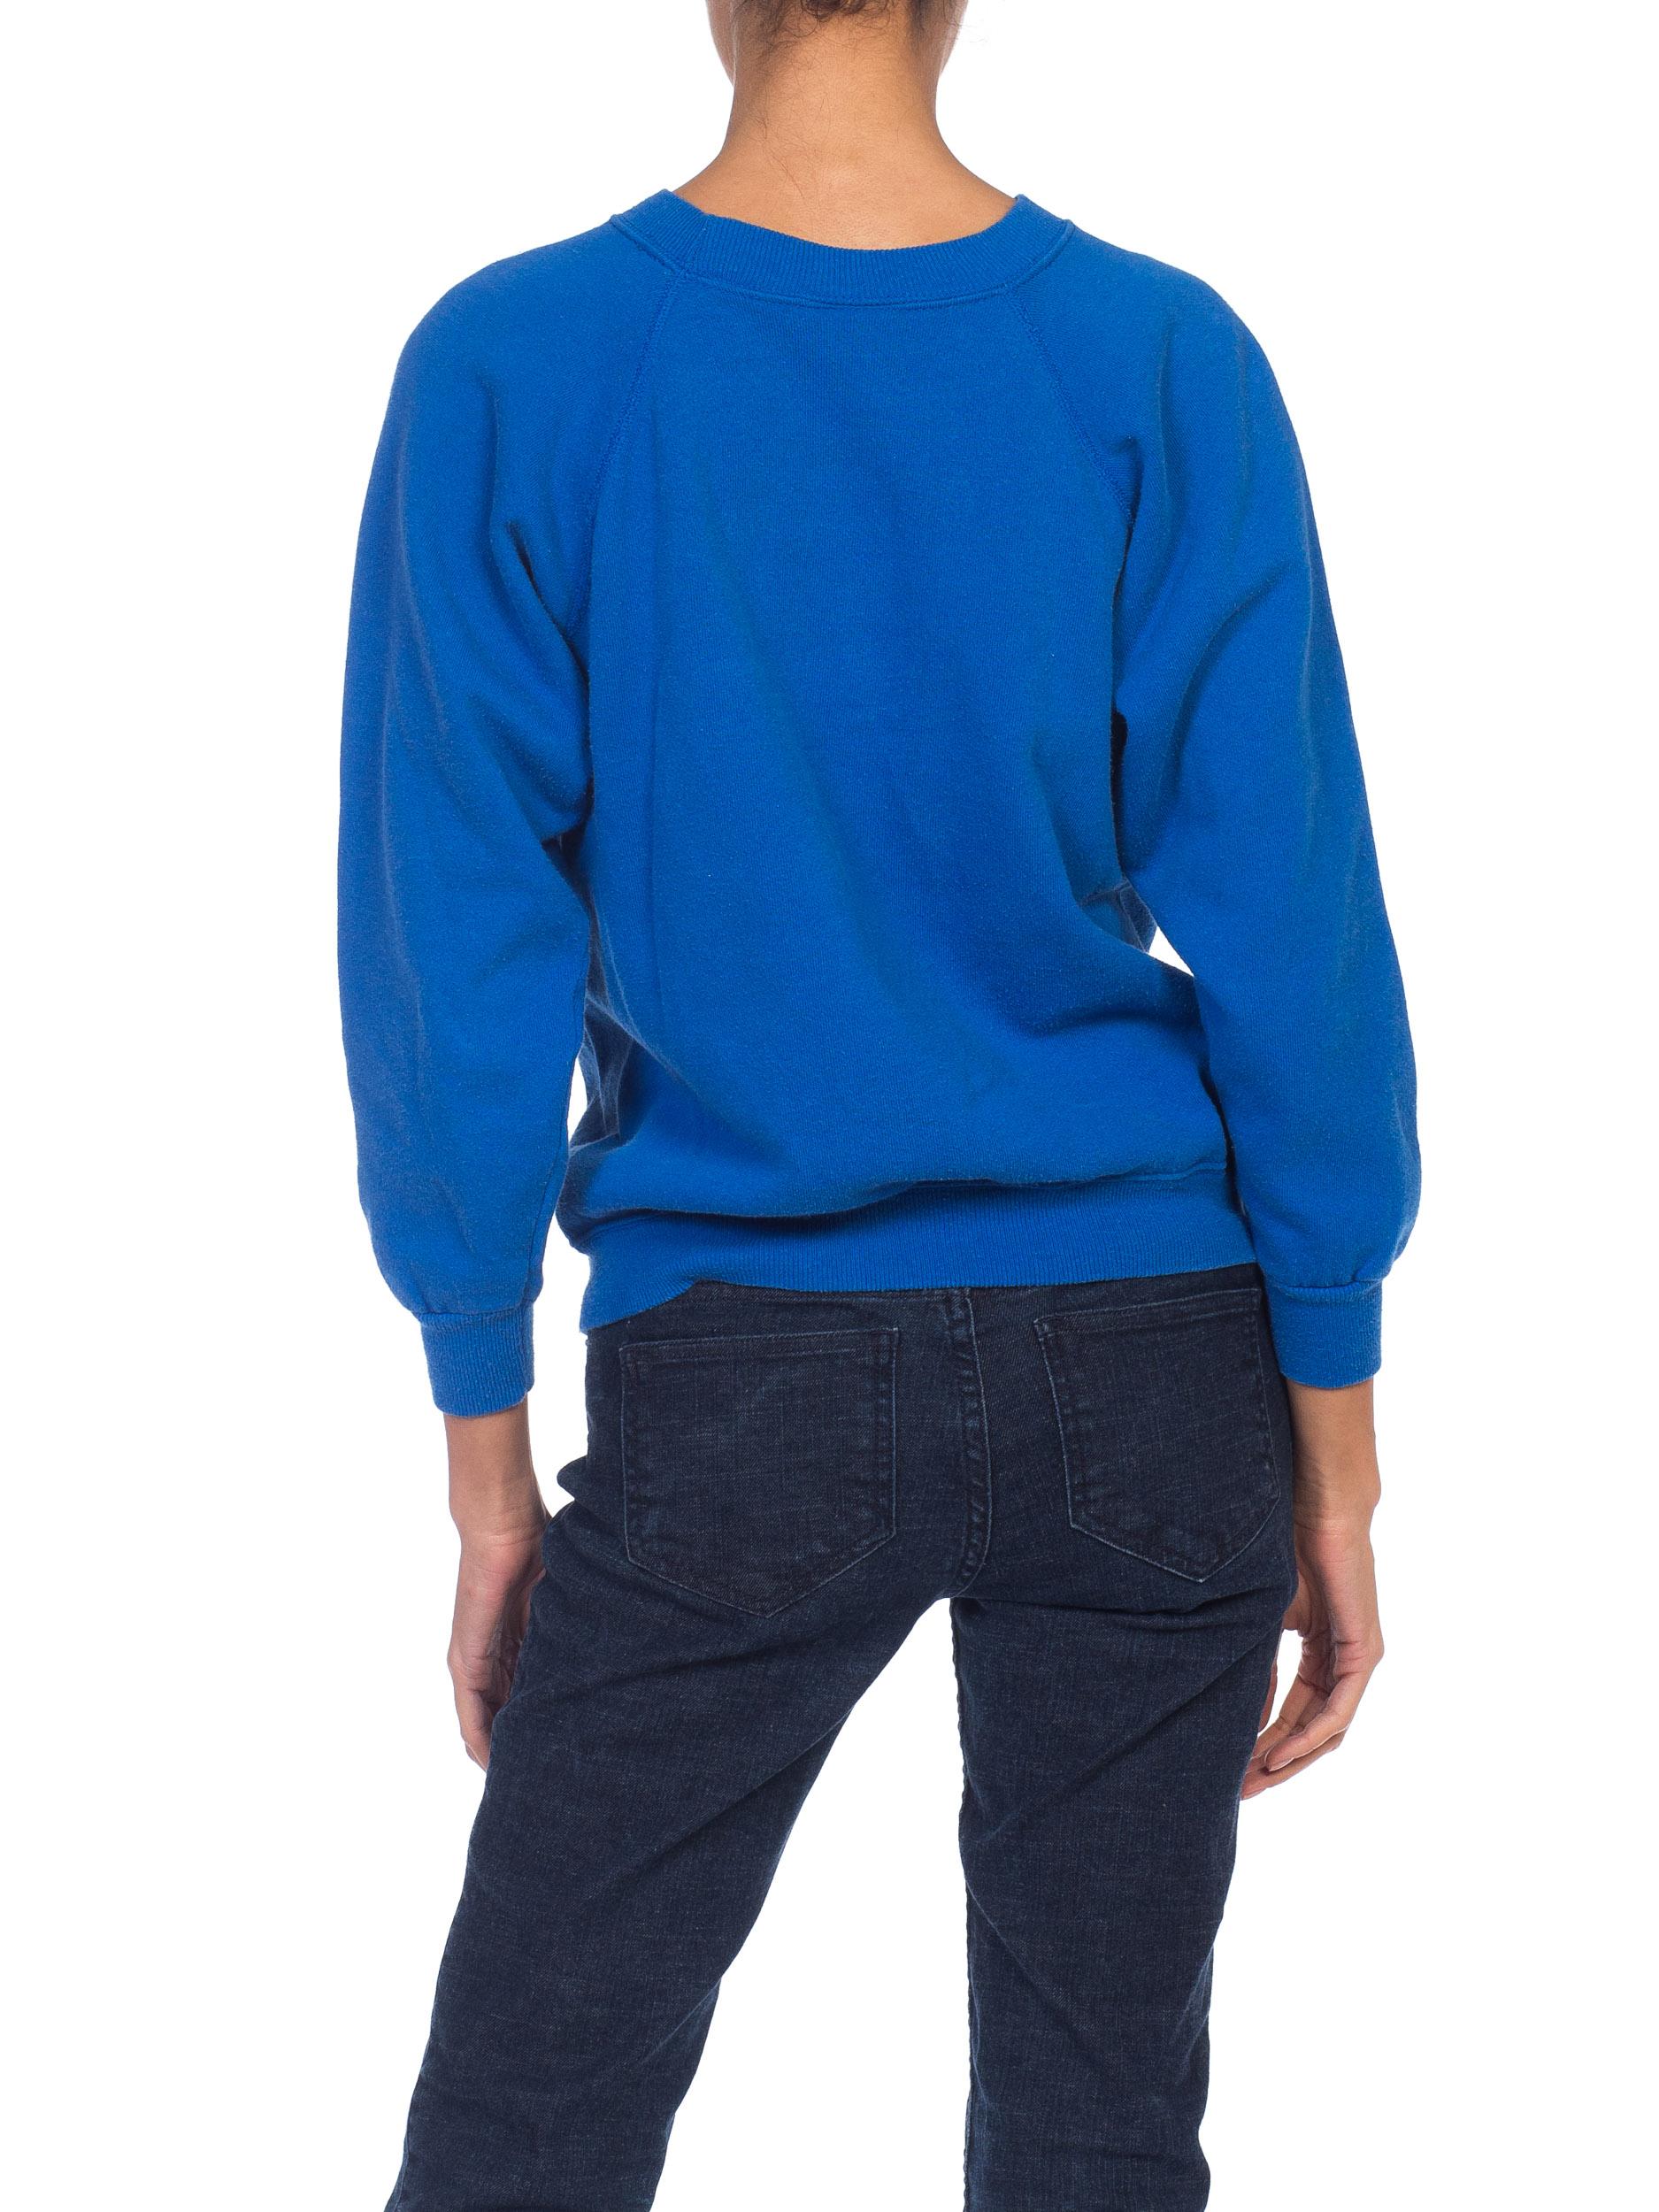 gucci sweater blue